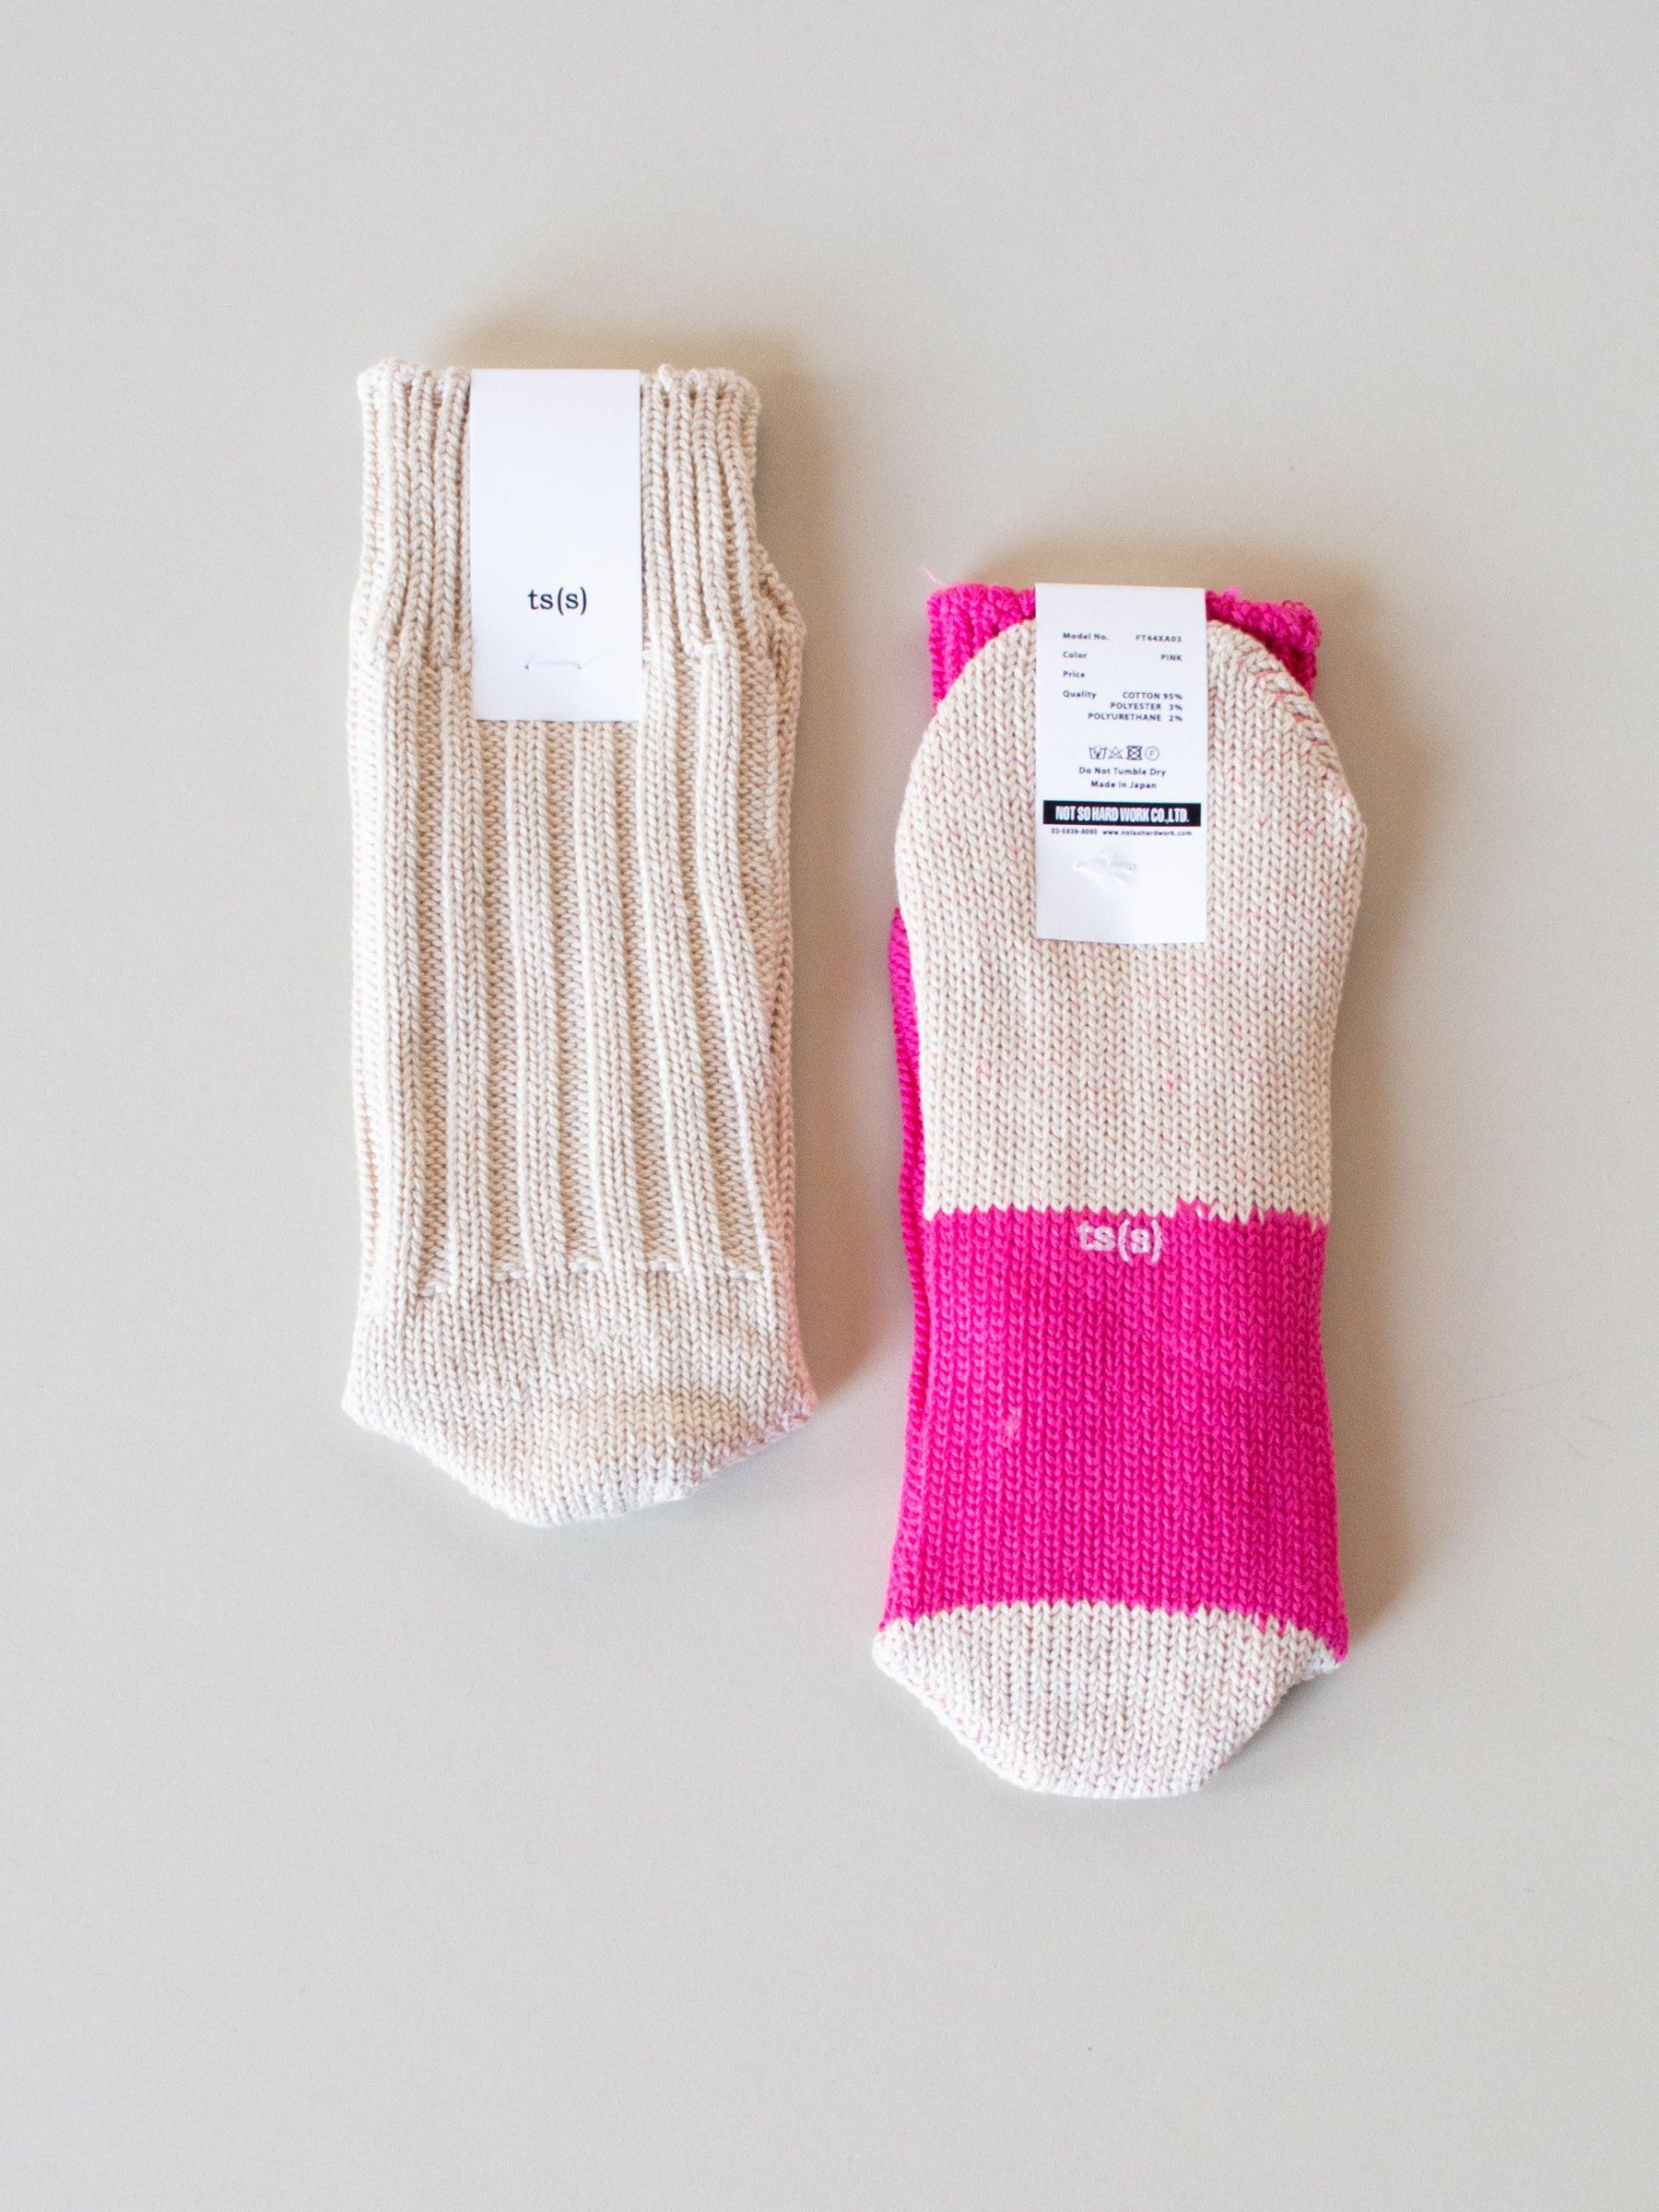 Namu Shop - ts(s) Mix and Match Cotton Rib Sock - Multiple Colors